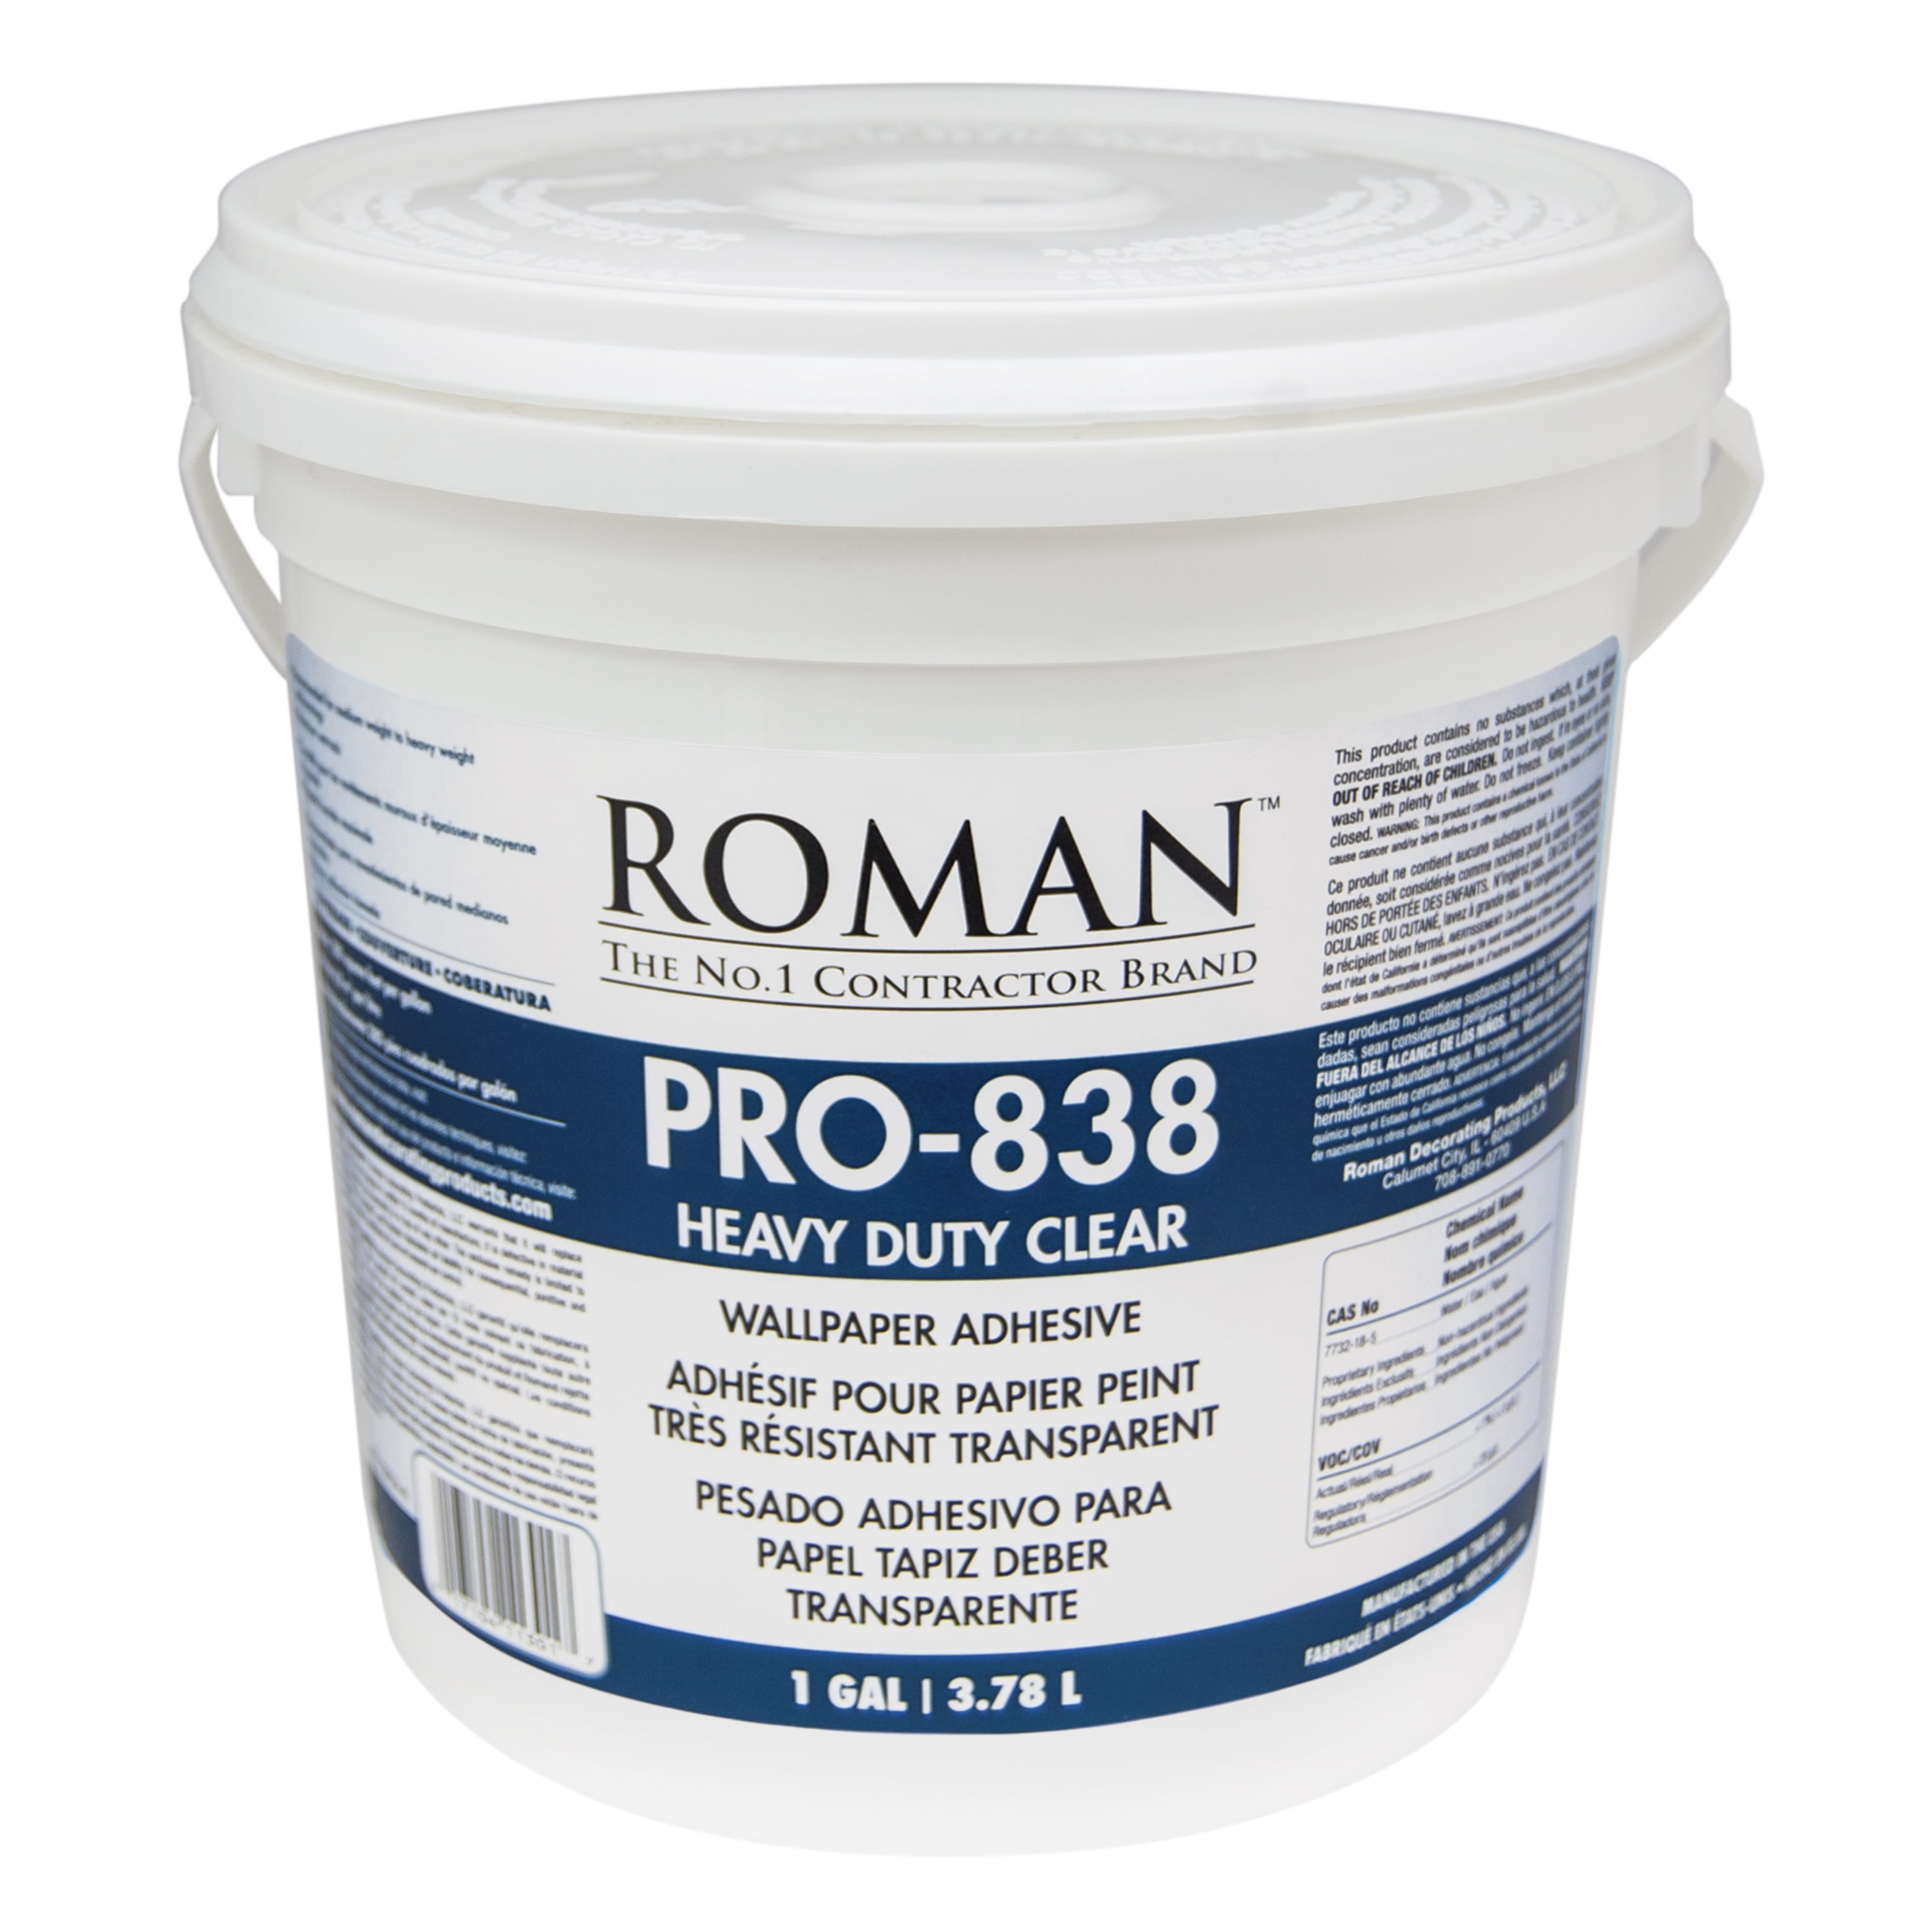 Roman Pro-838 Heavy Duty Clear Wallpaper Adhesive, 1-gallon, (300 Sq. Ft) -  